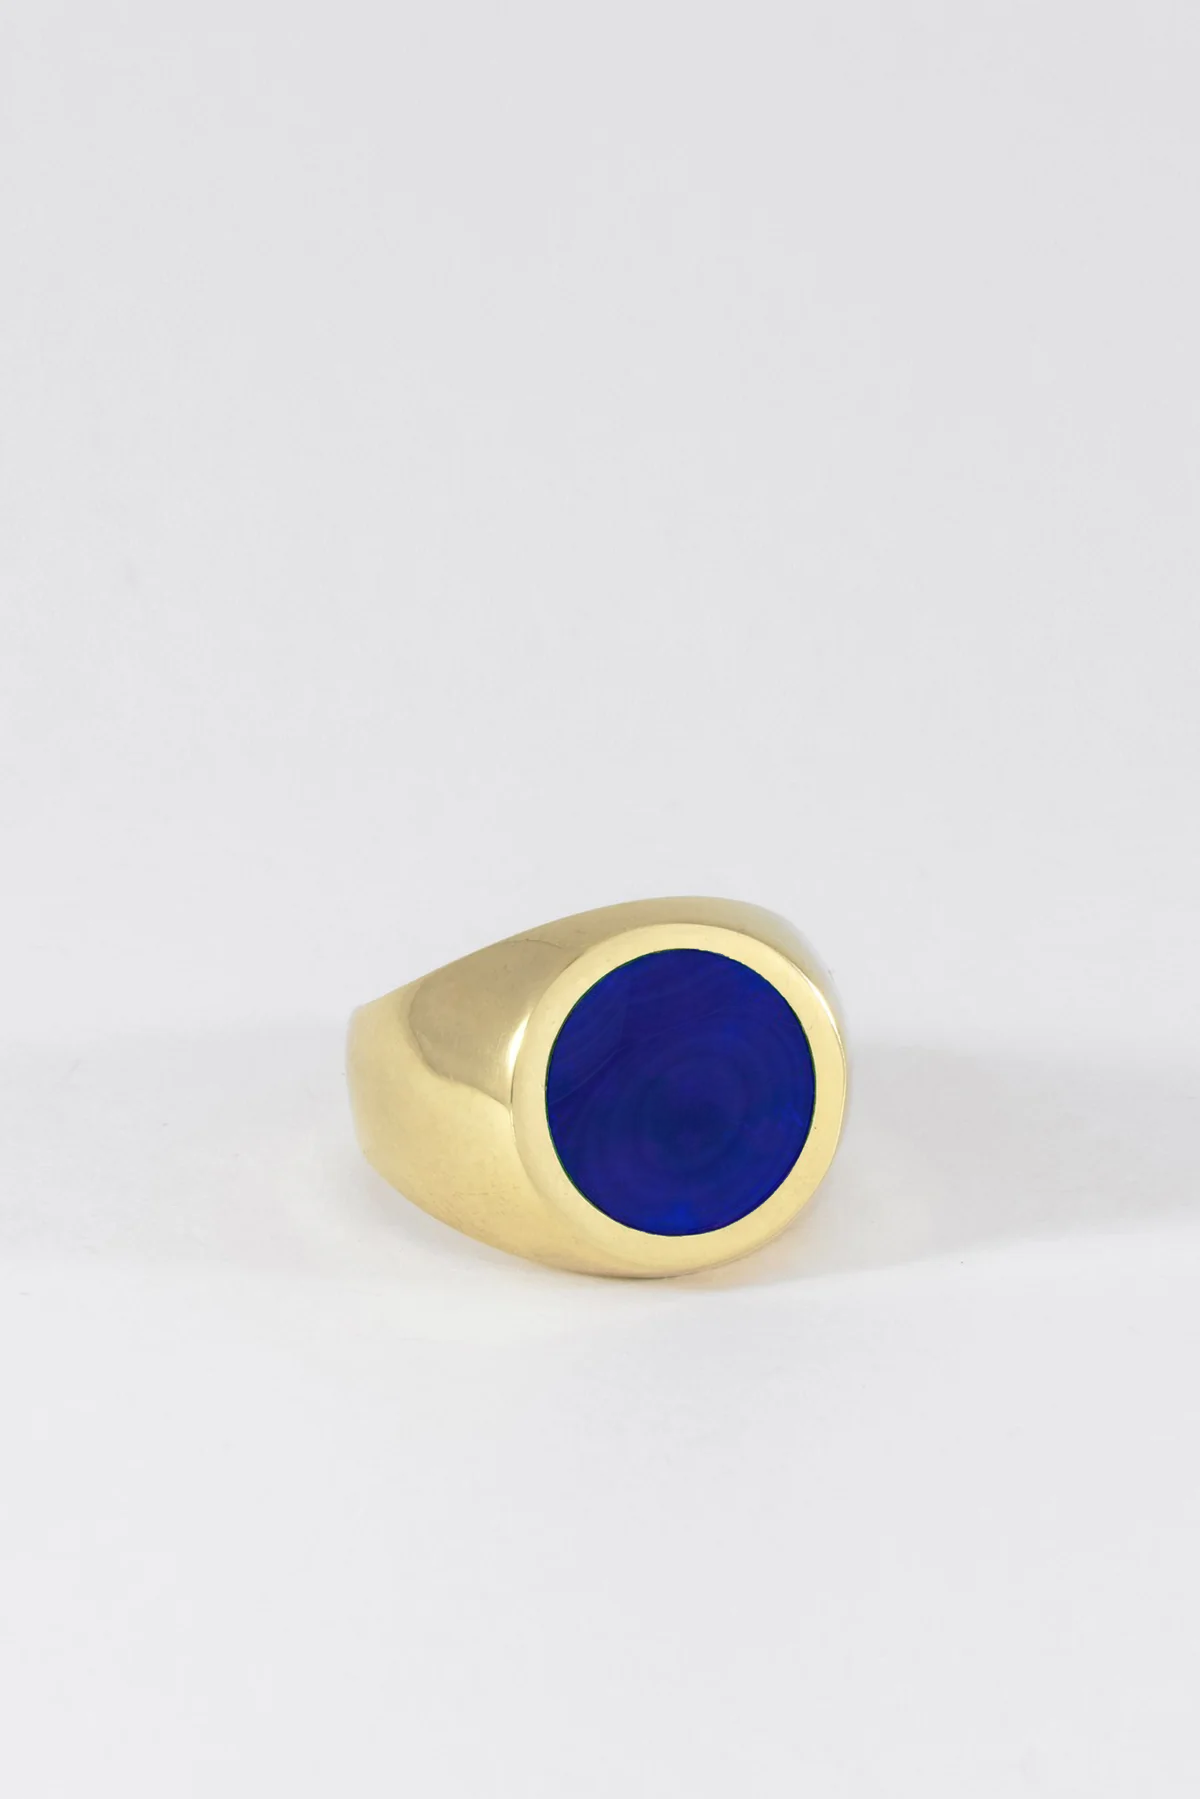 Brass Lapis Lazuli Signet Ring - Round